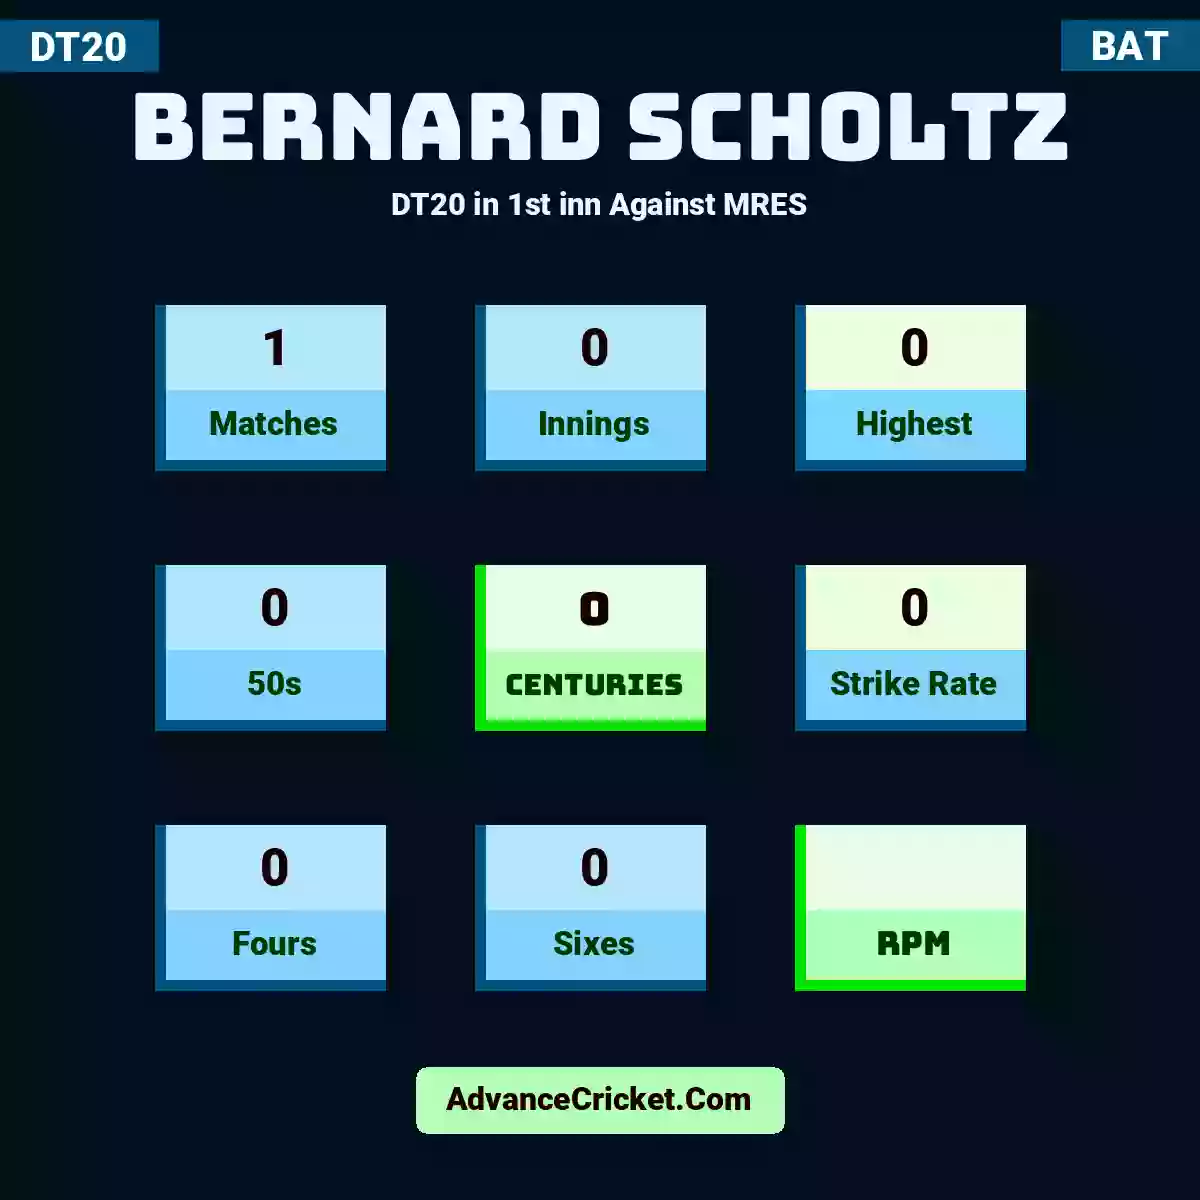 Bernard Scholtz DT20  in 1st inn Against MRES, Bernard Scholtz played 1 matches, scored 0 runs as highest, 0 half-centuries, and 0 centuries, with a strike rate of 0. B.Scholtz hit 0 fours and 0 sixes.